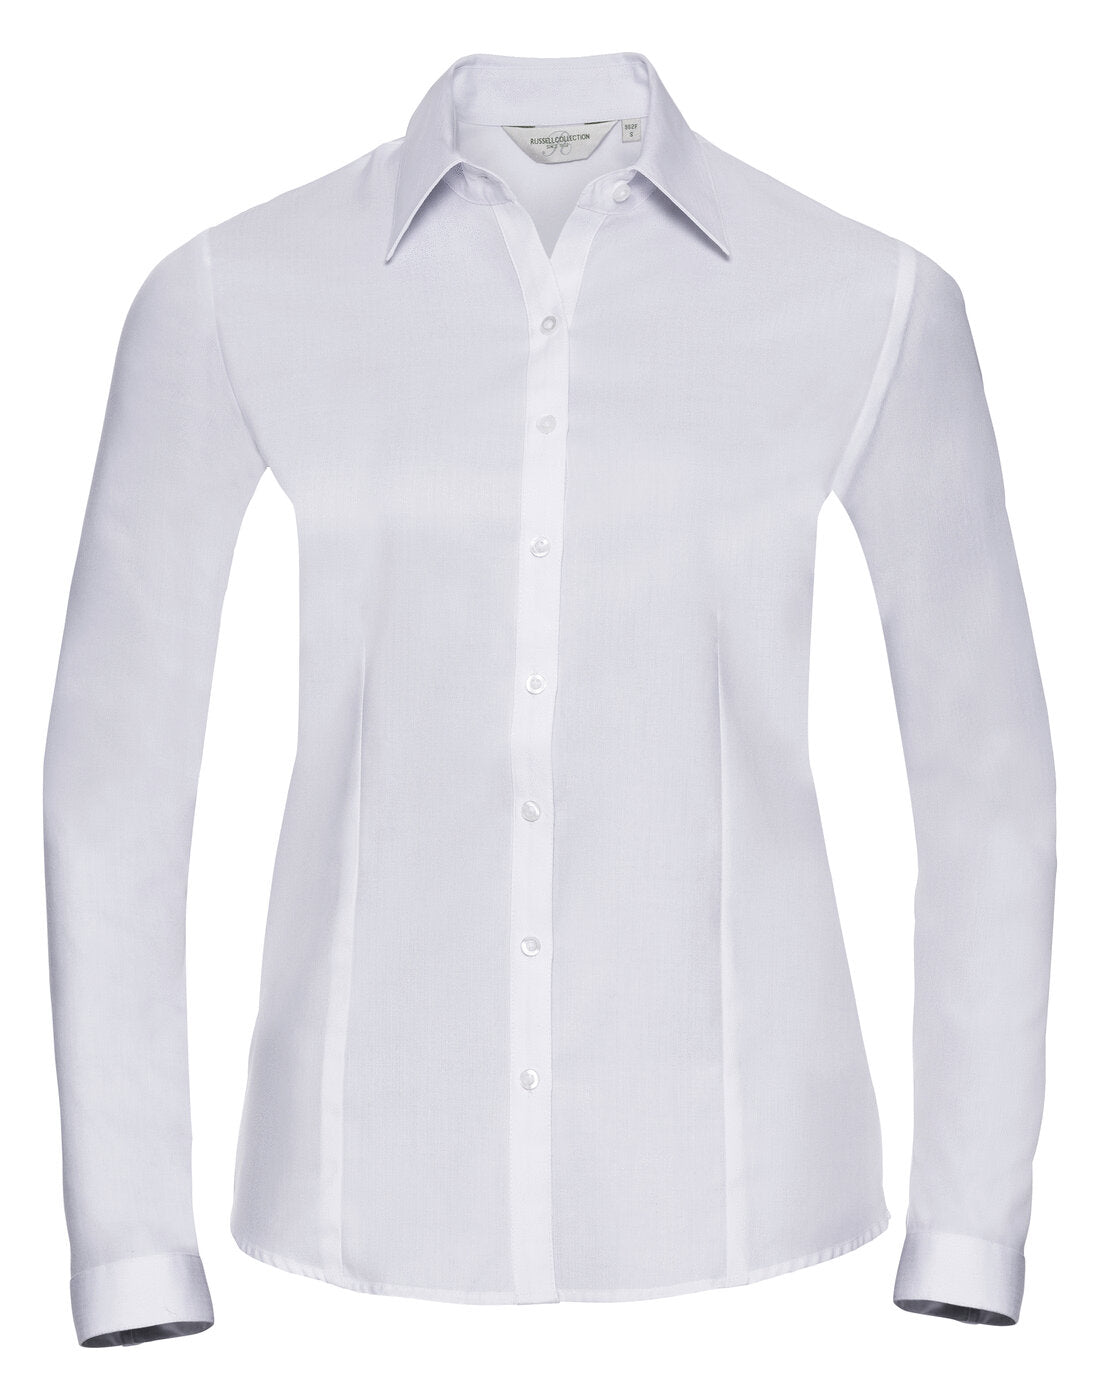 Russell Ladies Long Sleeve Herringbone Shirt White